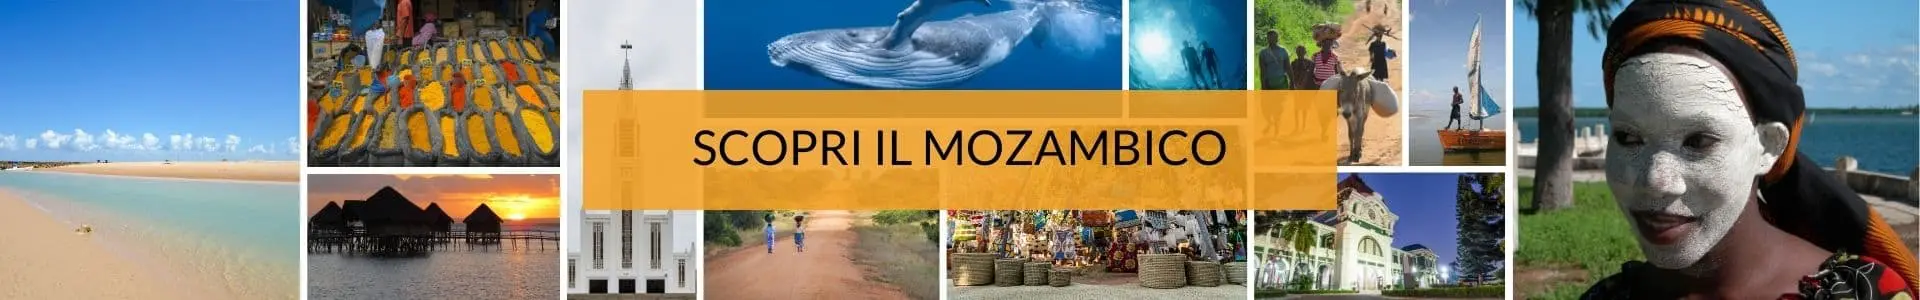 viaggi-in-mozambico-mokoro